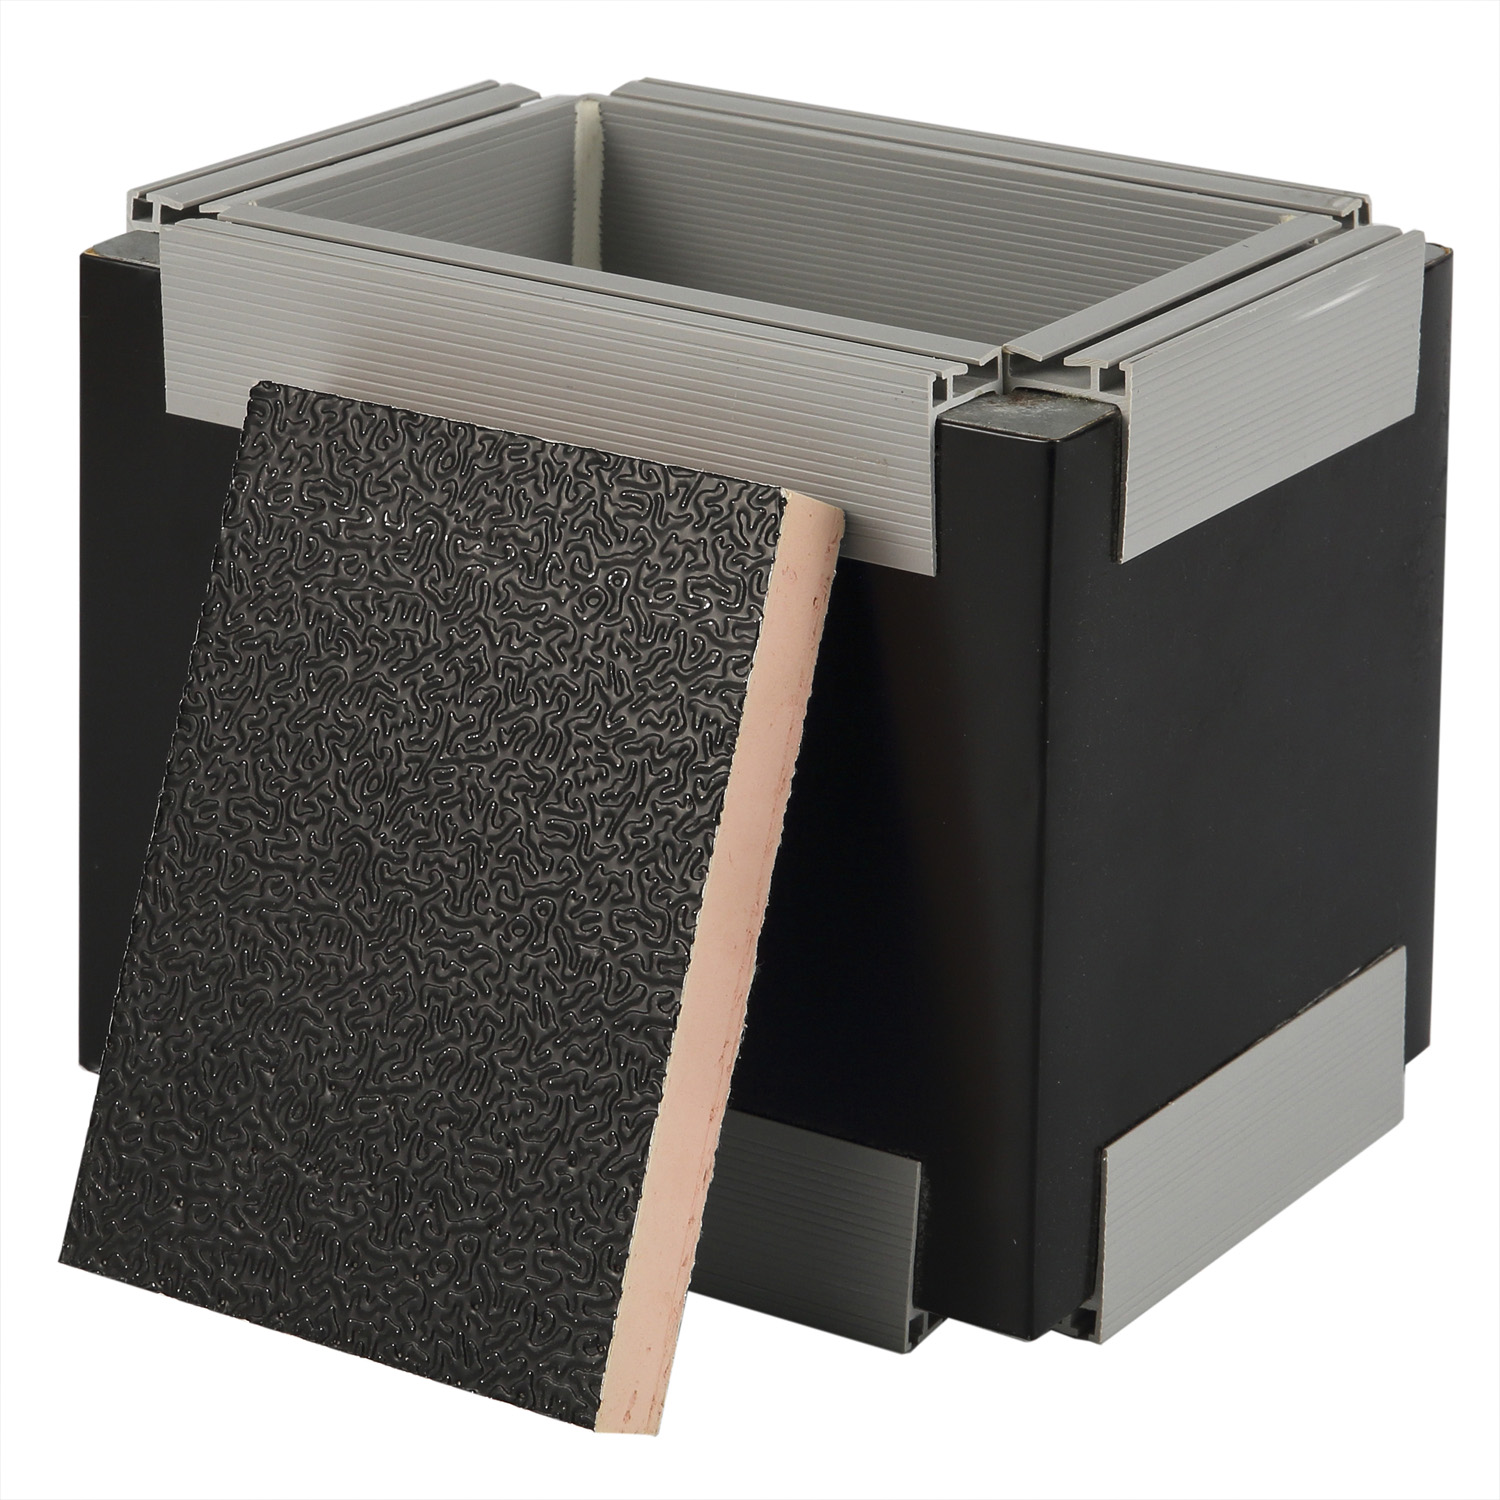 Black Aluminum Foil Foam Laminated Phenolic Insulation Board